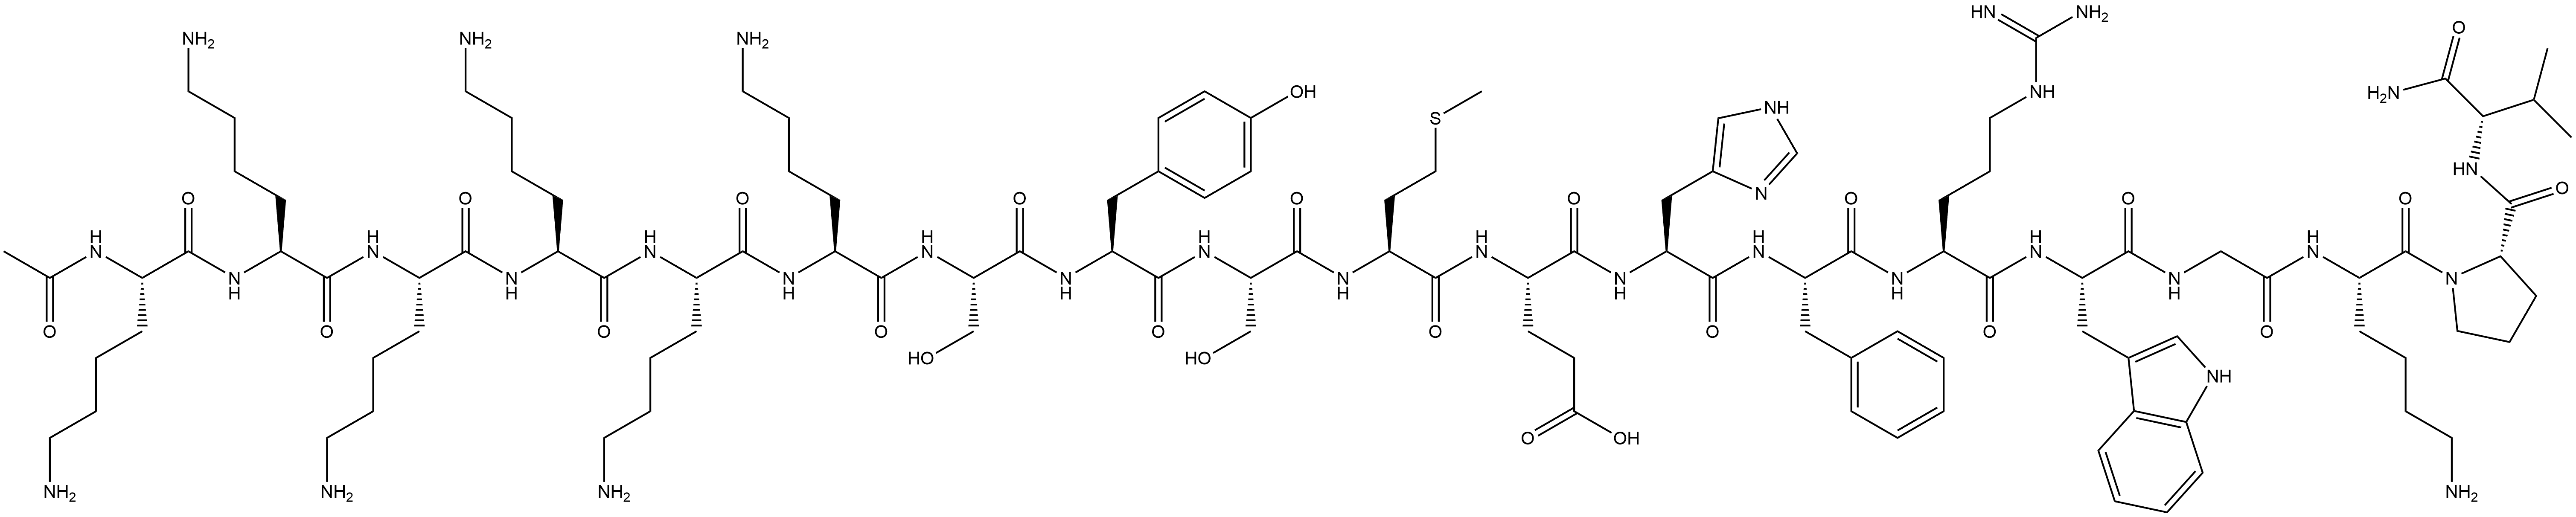 926277-68-1 L-Valinamide, N2-acetyl-L-lysyl-L-lysyl-L-lysyl-L-lysyl-L-lysyl-L-lysyl-L-seryl-L-tyrosyl-L-seryl-L-methionyl-L-α-glutamyl-L-histidyl-L-phenylalanyl-L-arginyl-L-tryptophylglycyl-L-lysyl-L-prolyl-